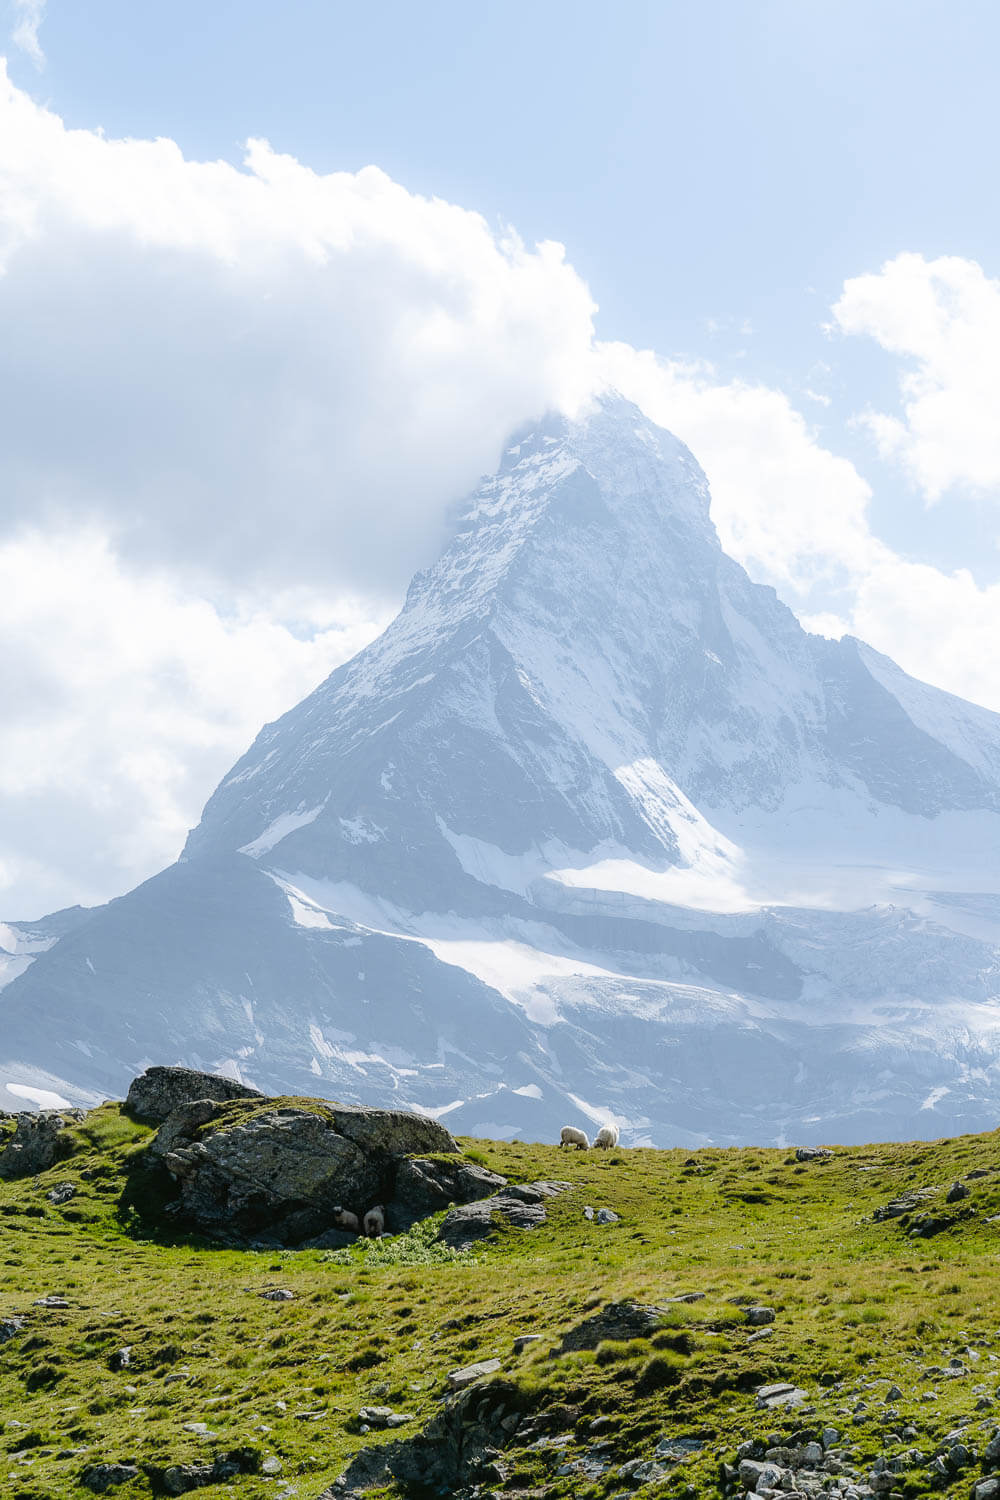 Valais Blacknose sheep and Matterhorn